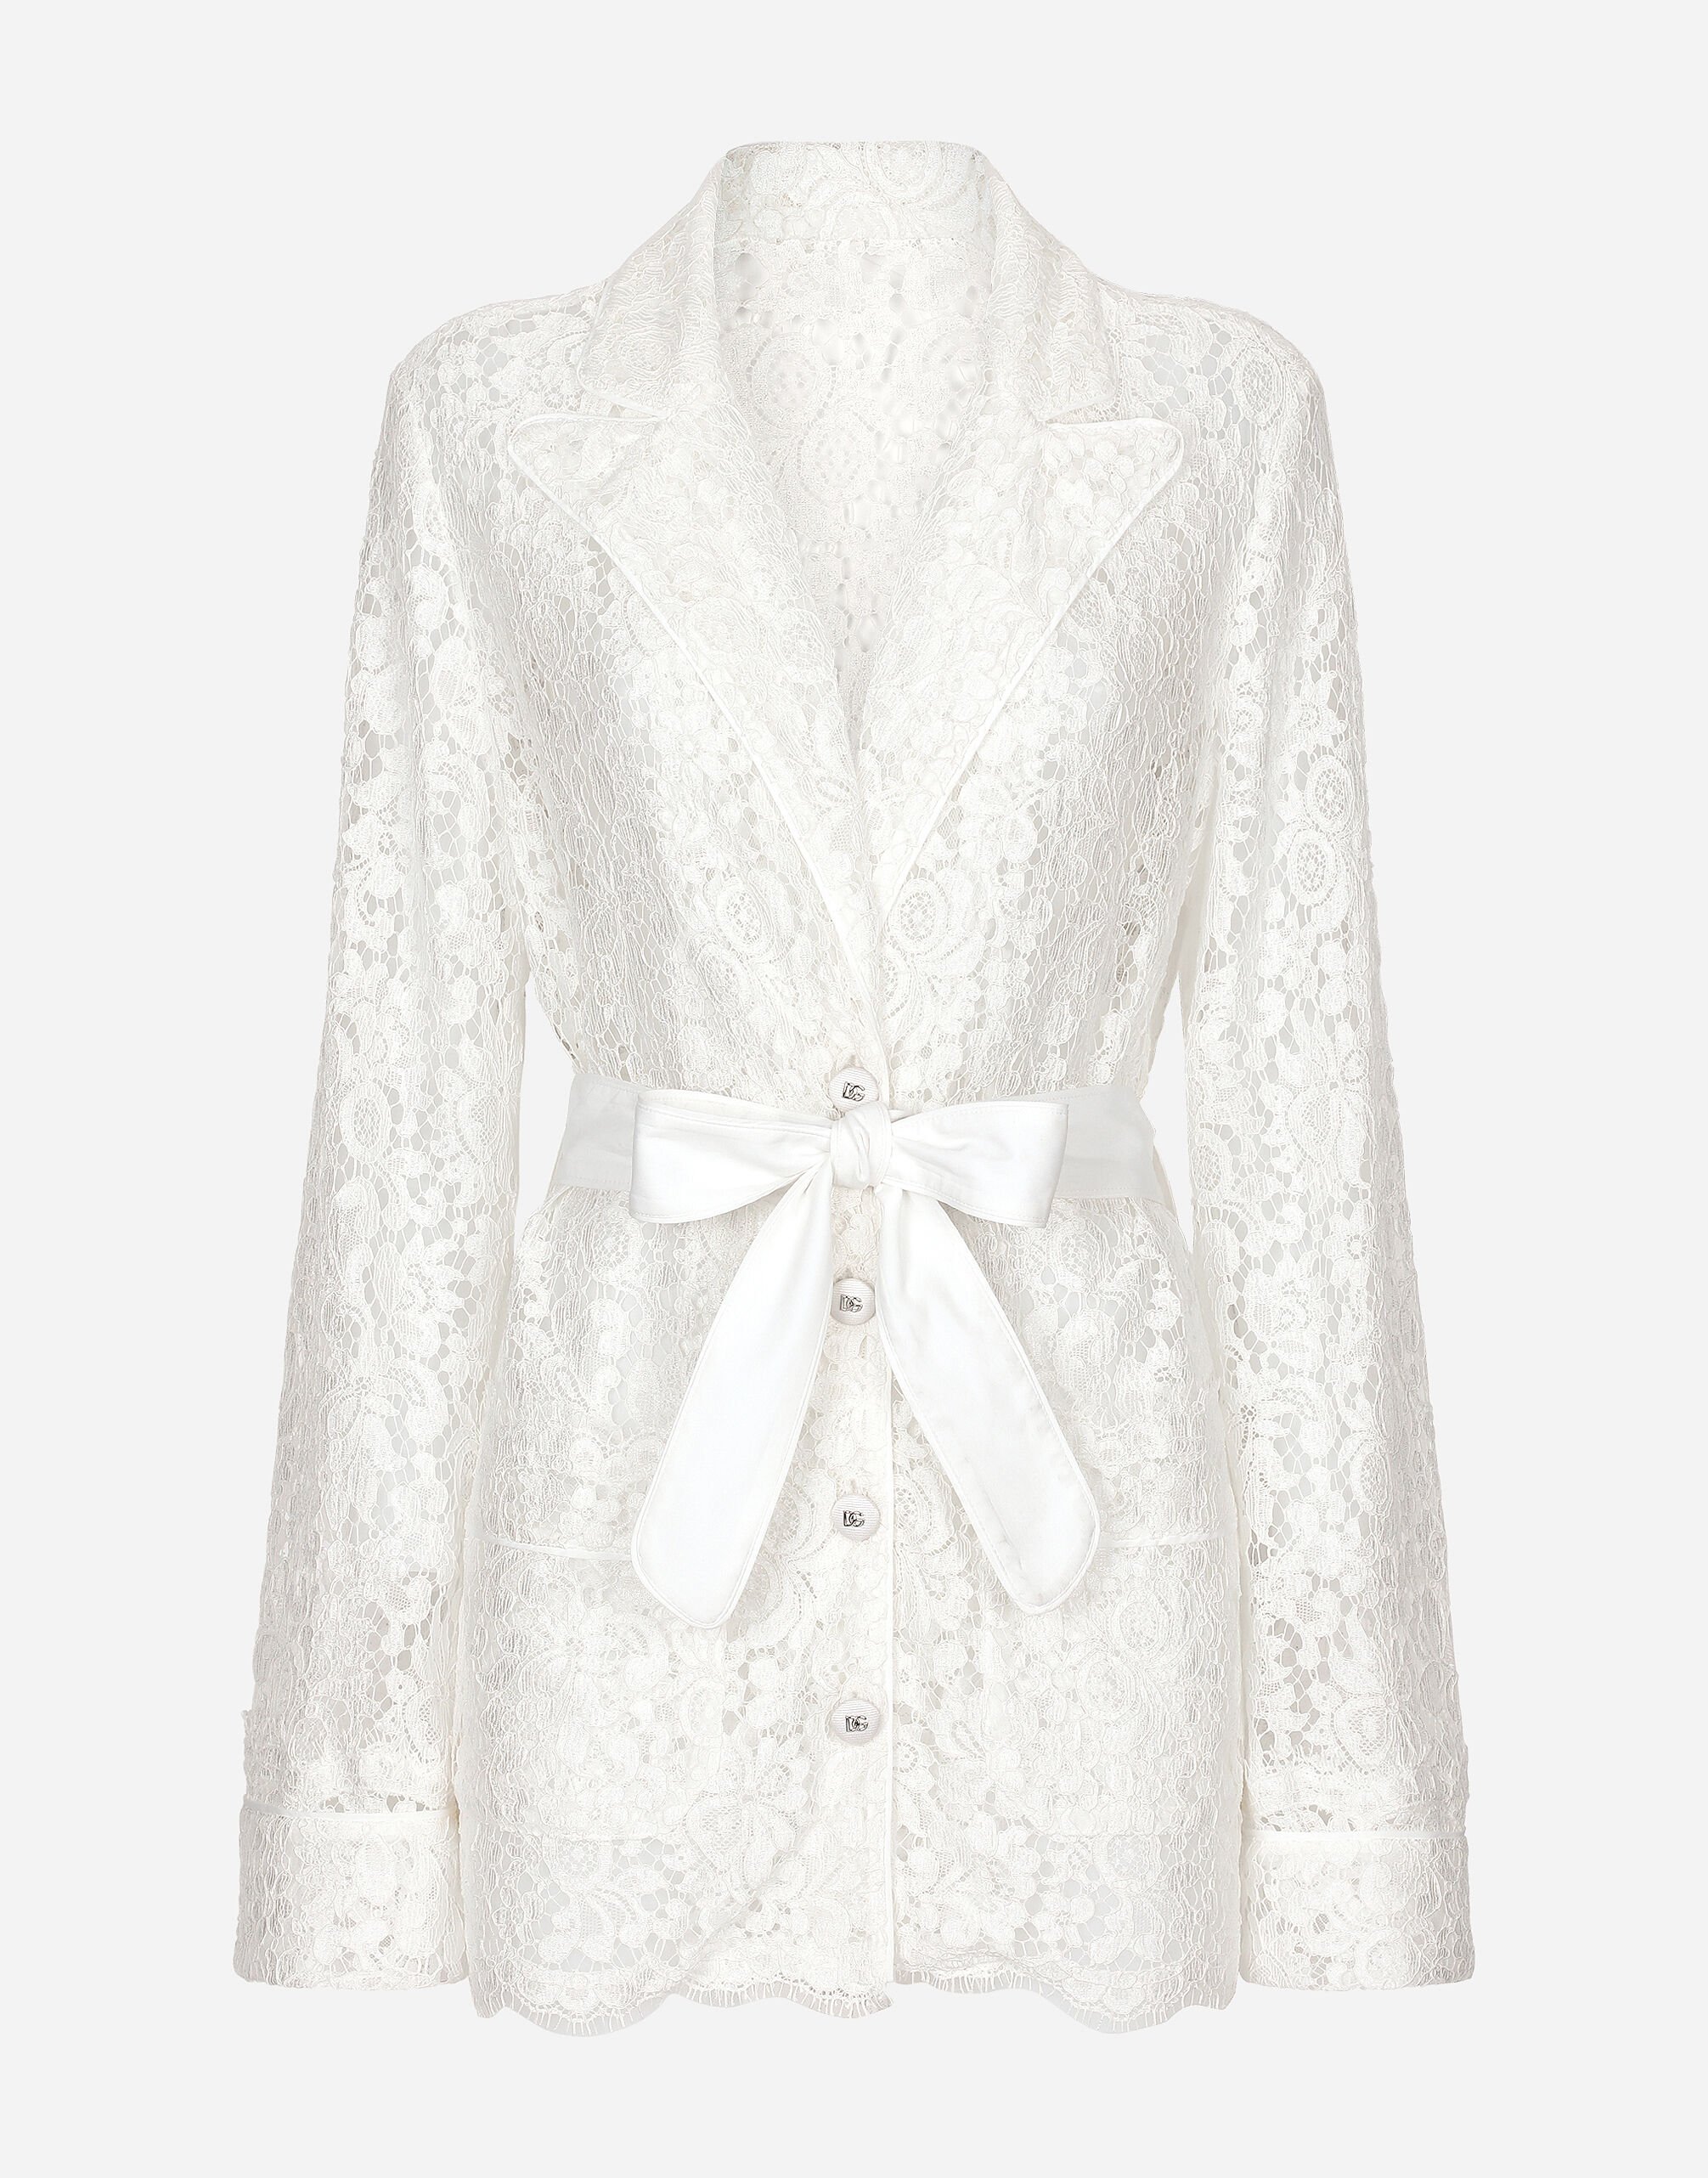 Dolce & Gabbana Camisa pijama de encaje cordonetto floral Amarillo F29UCTHJMOK